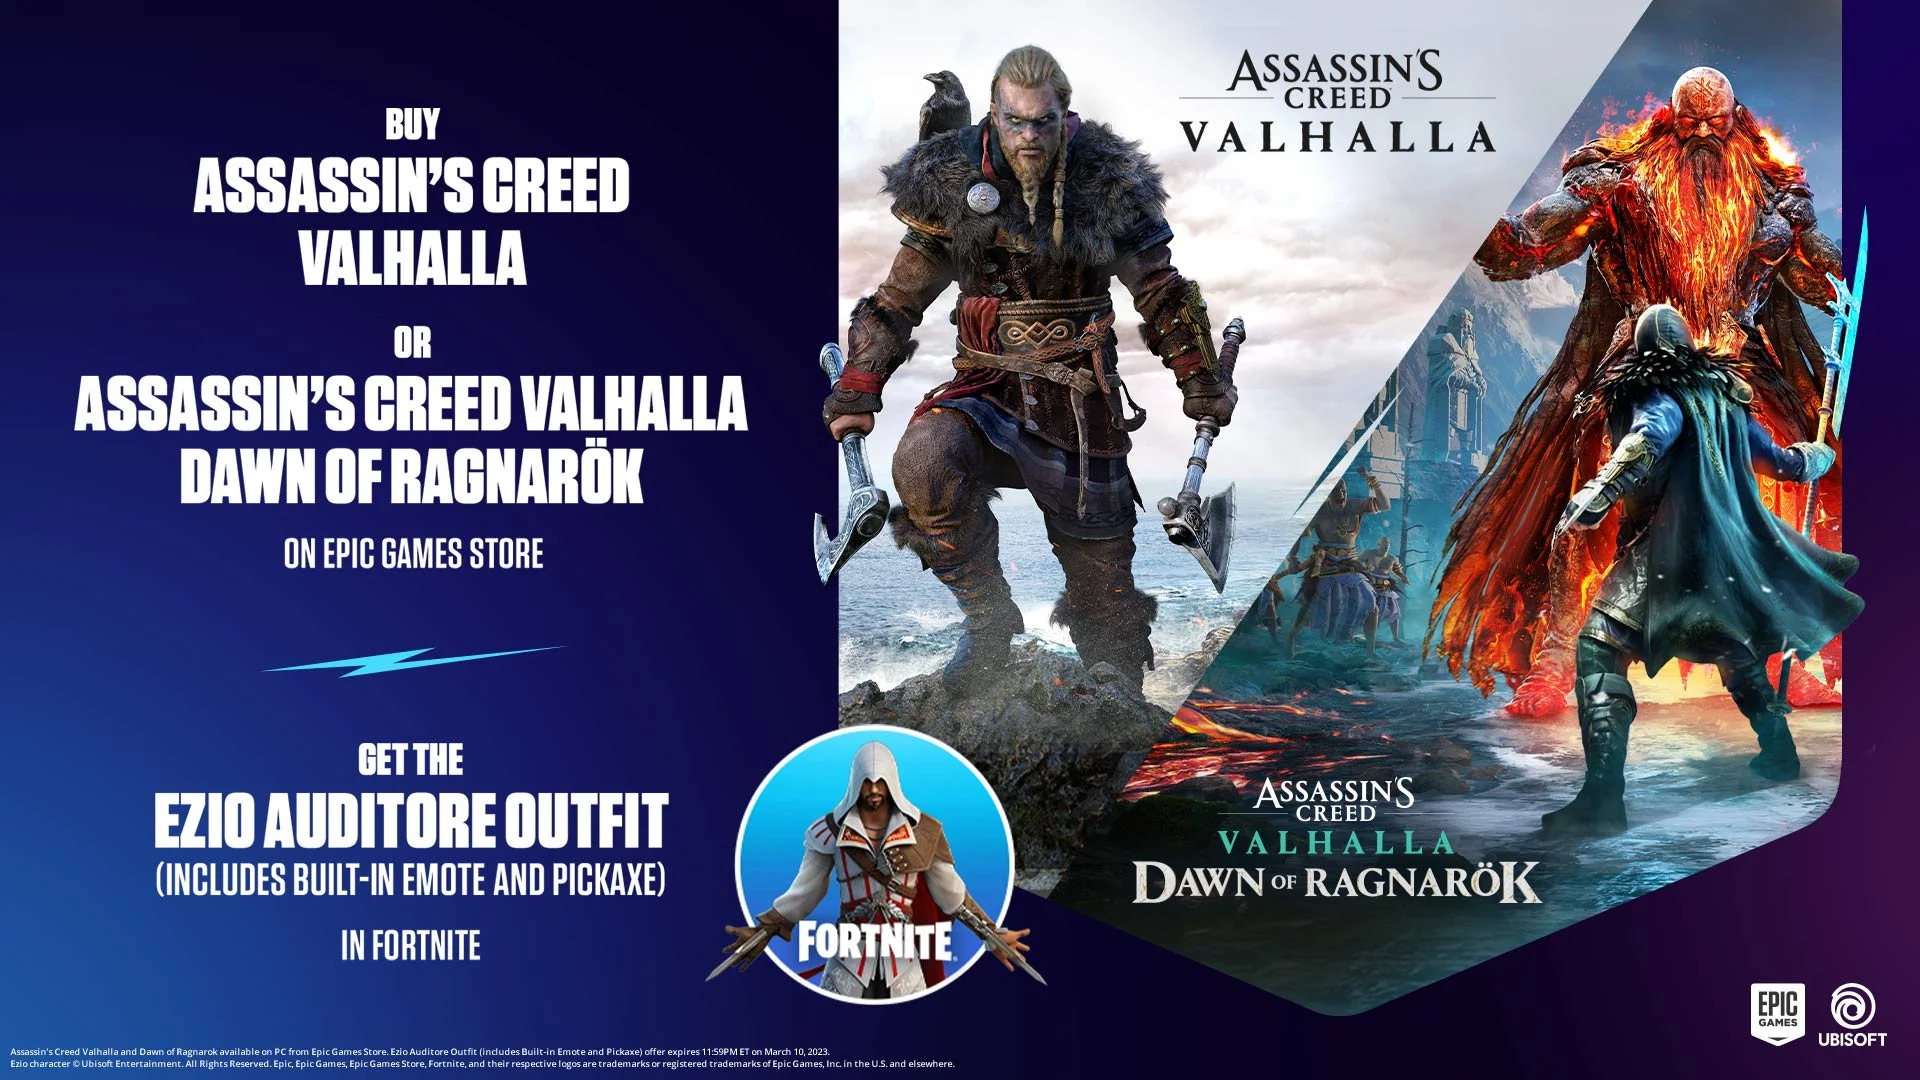 Набор Эцио Аудиторе из Assassin's Creed 2 появится в Fortnite 10 марта - фото 1